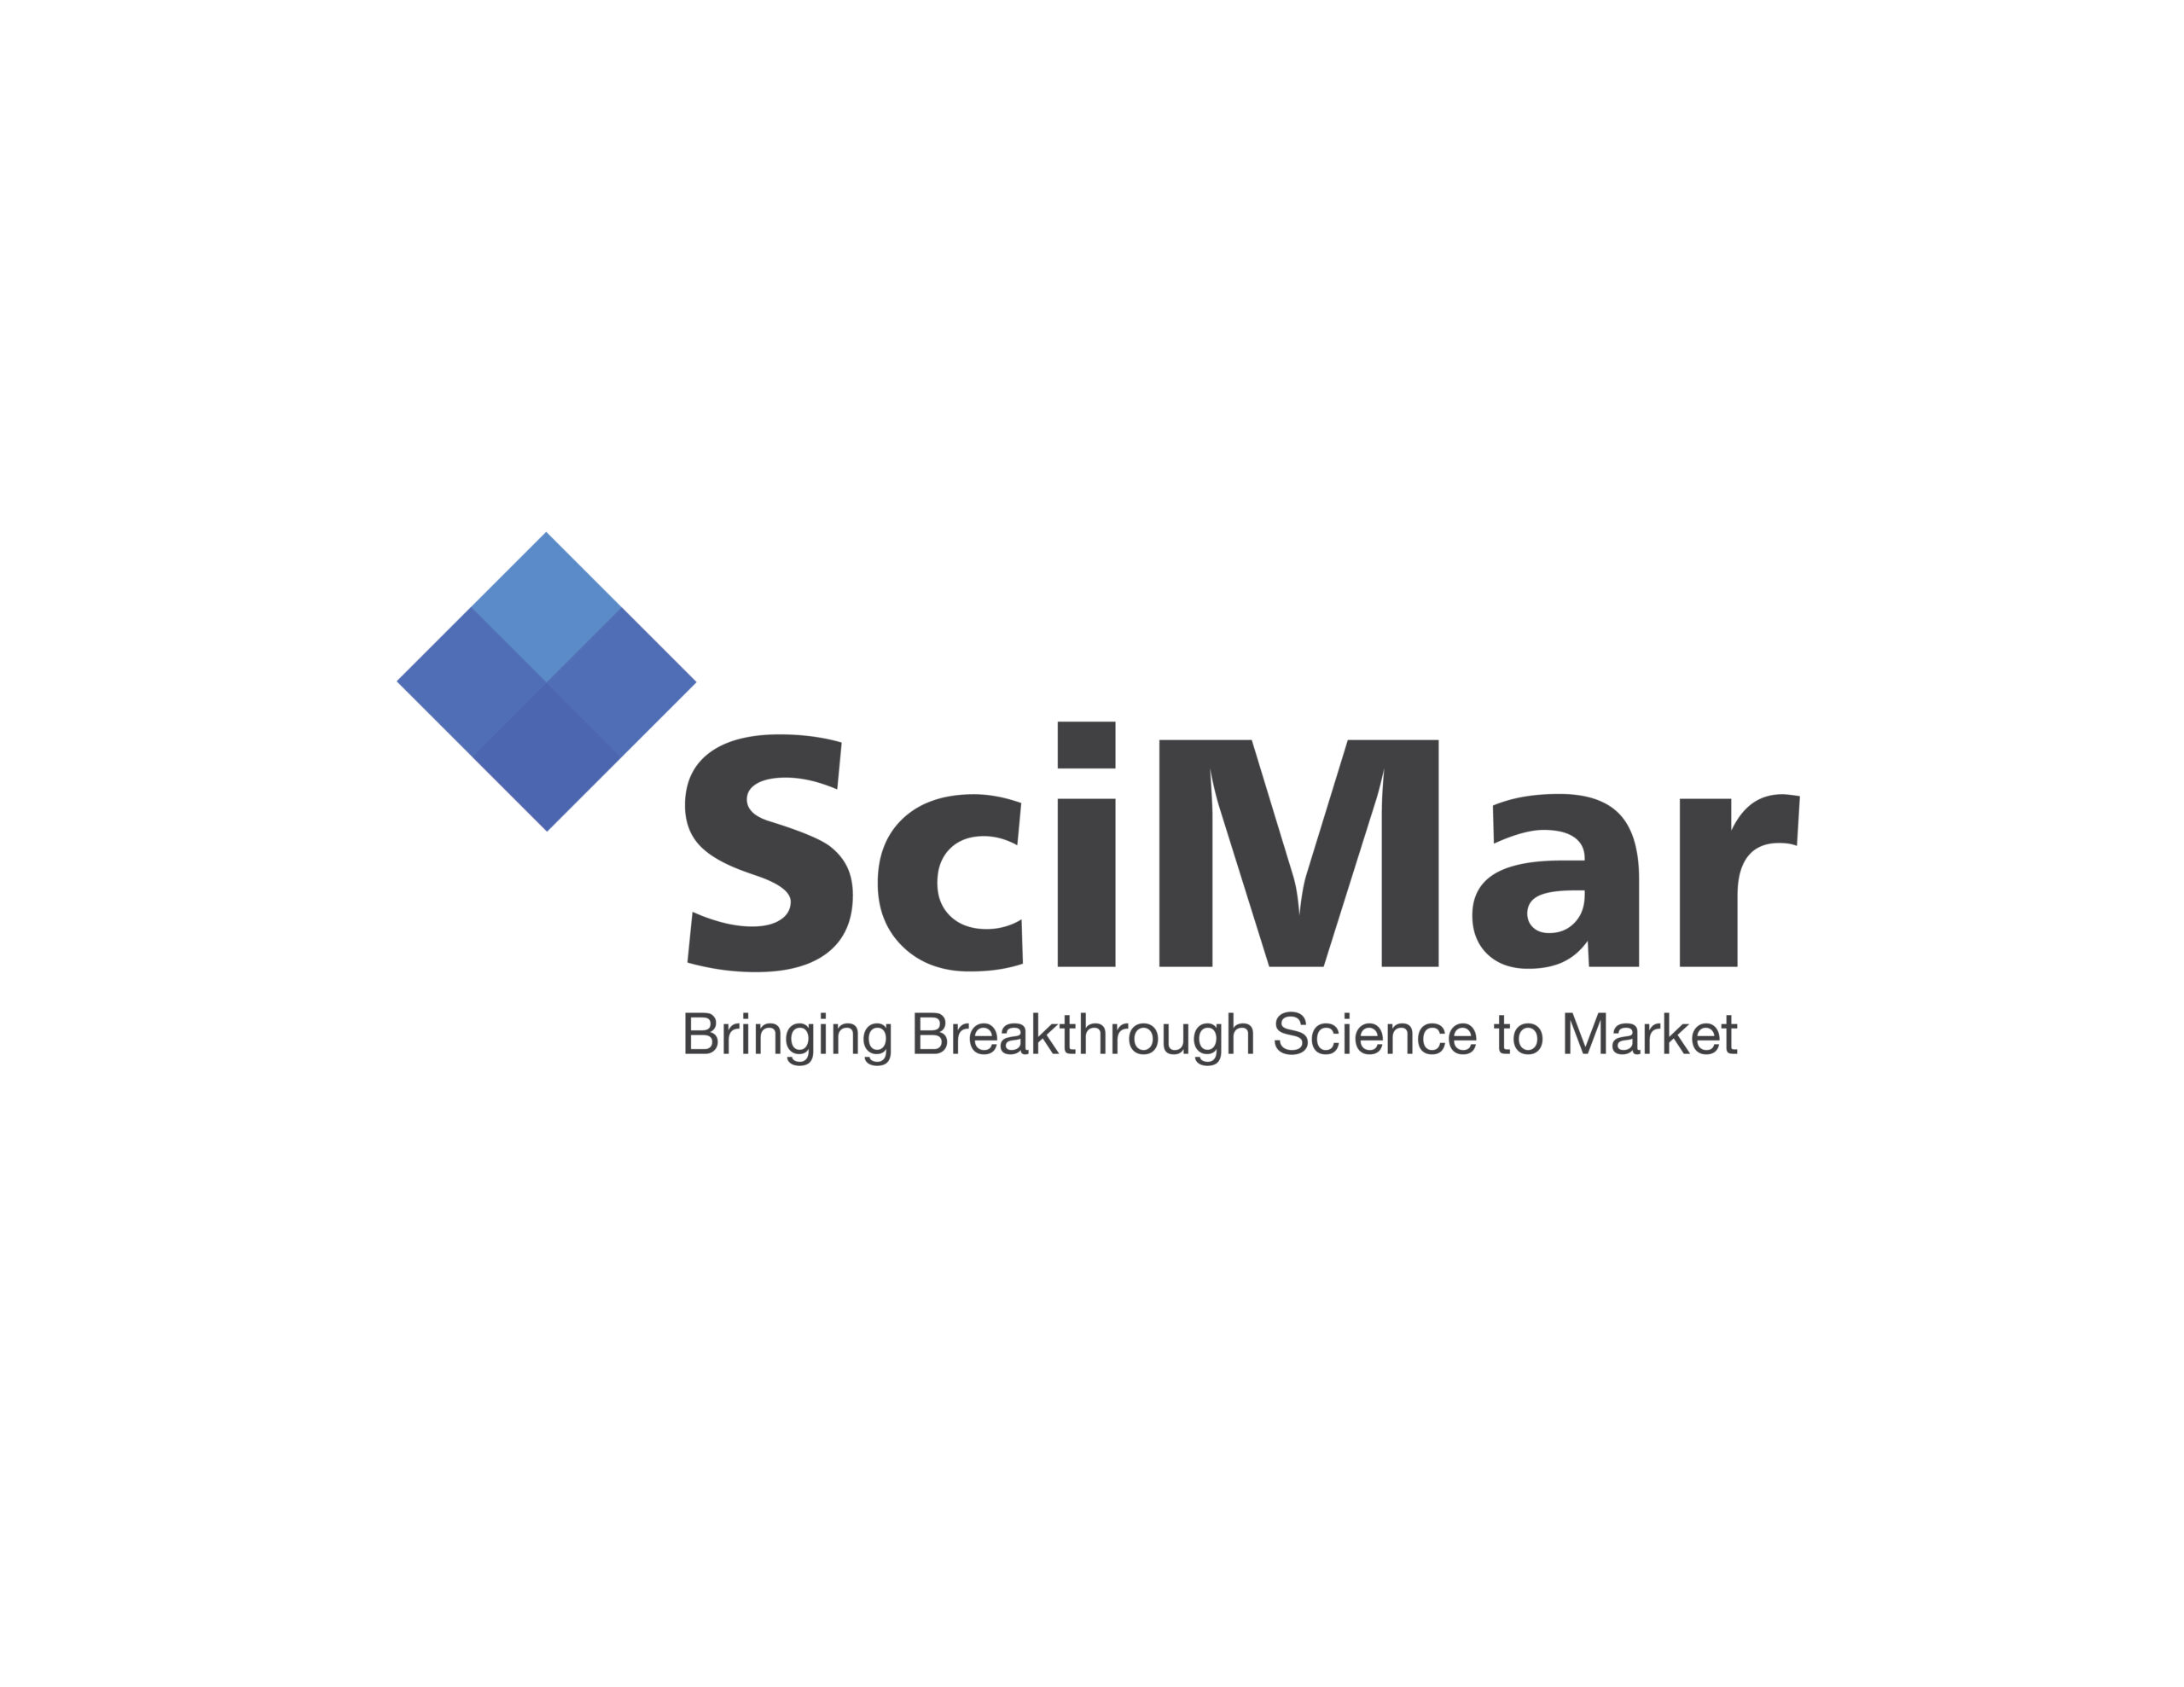 SciMar logo - "Bringing Breakthrough Science to Market"